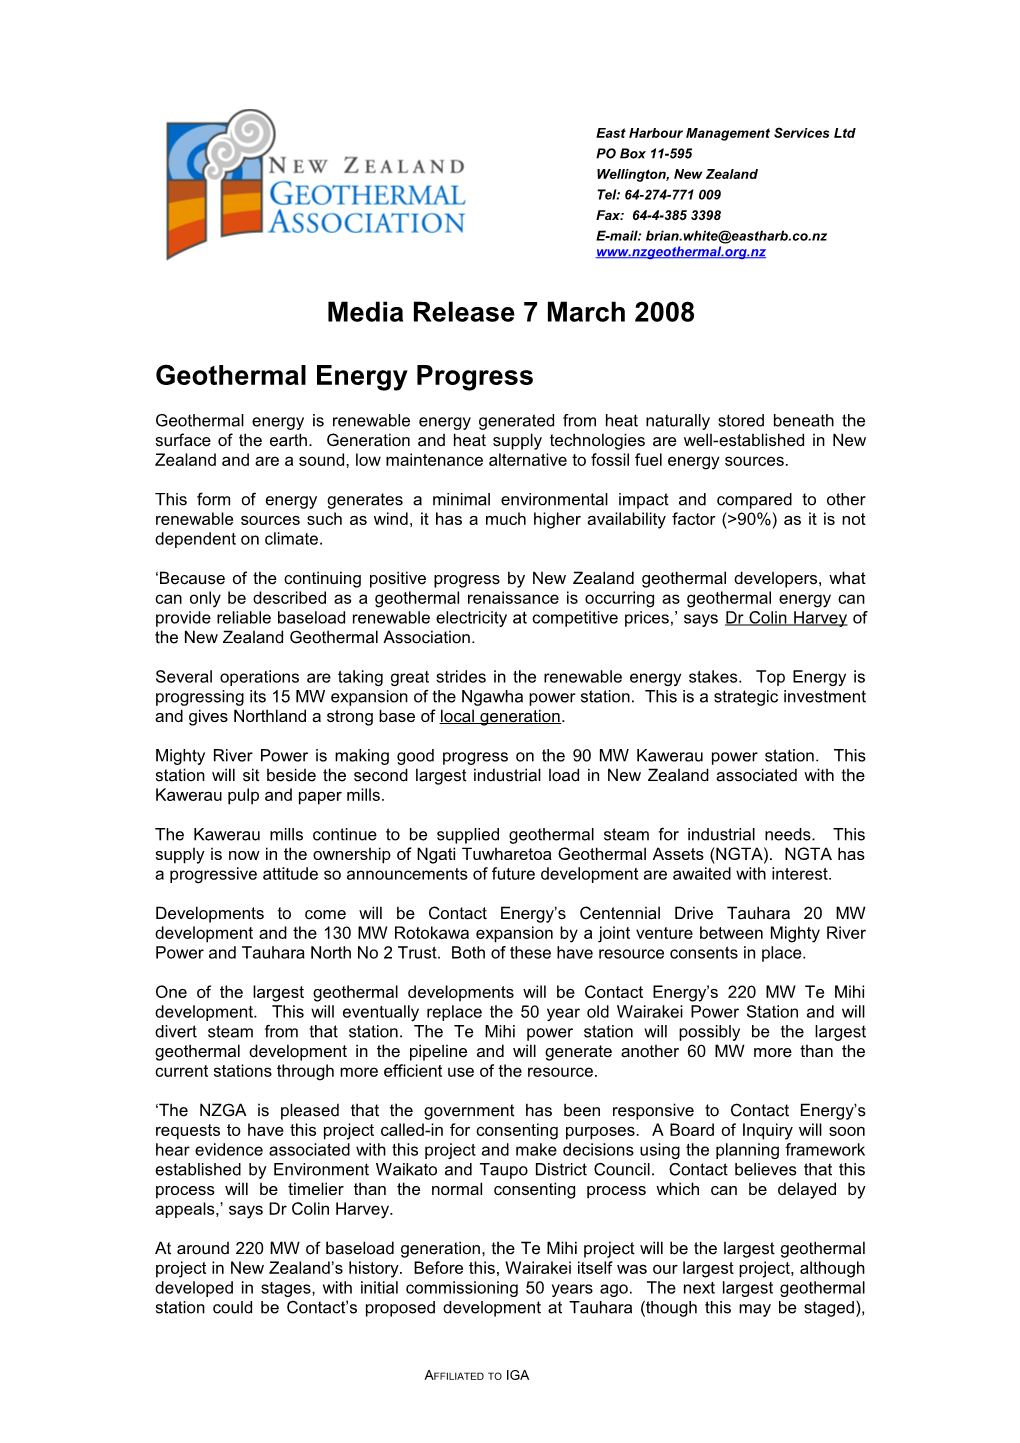 Geothermal Energy Progress